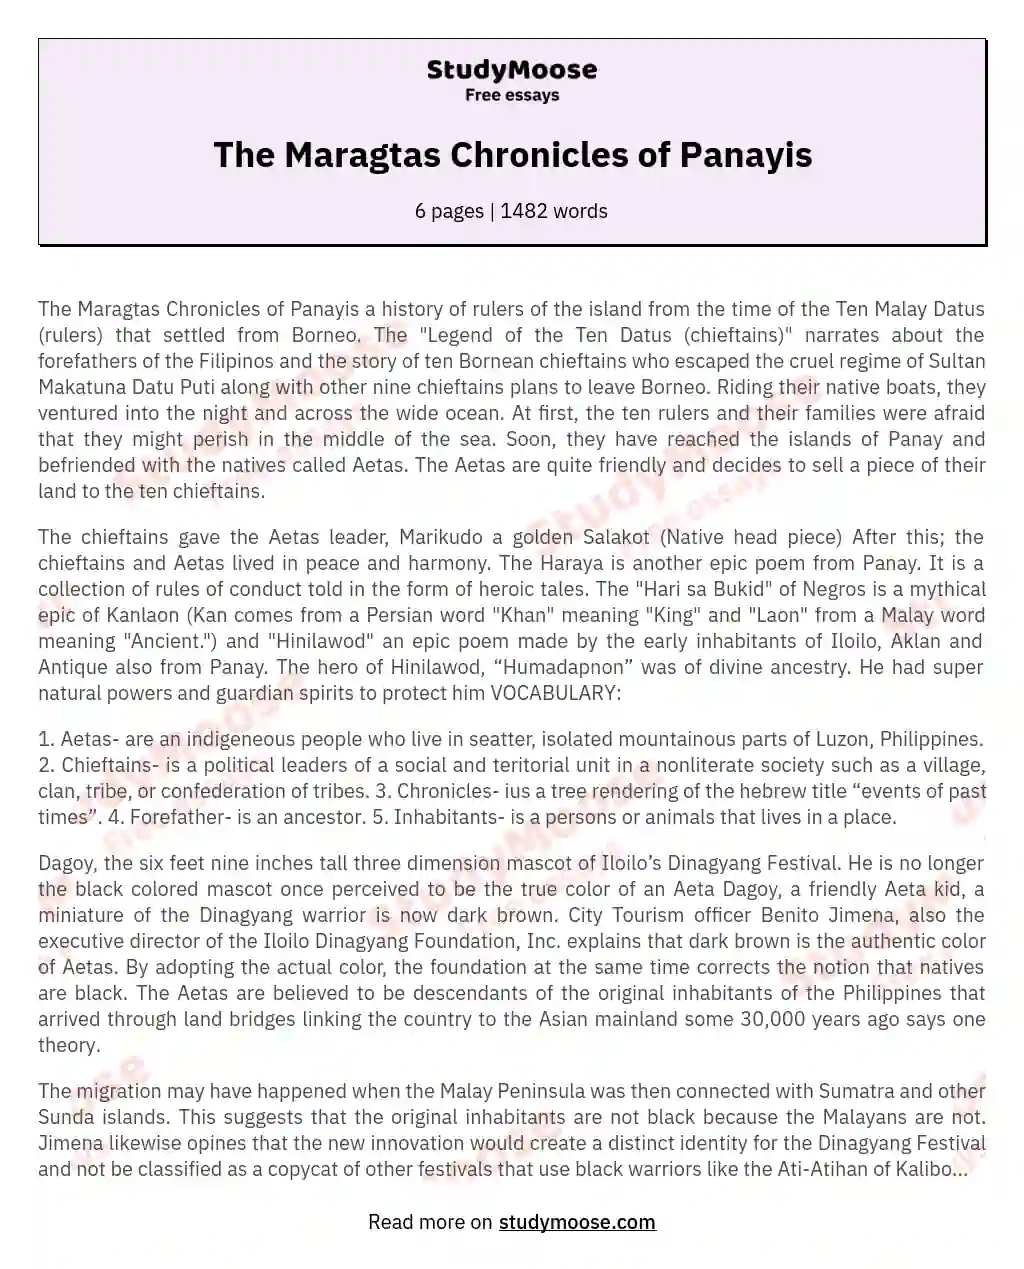 The Maragtas Chronicles of Panayis essay